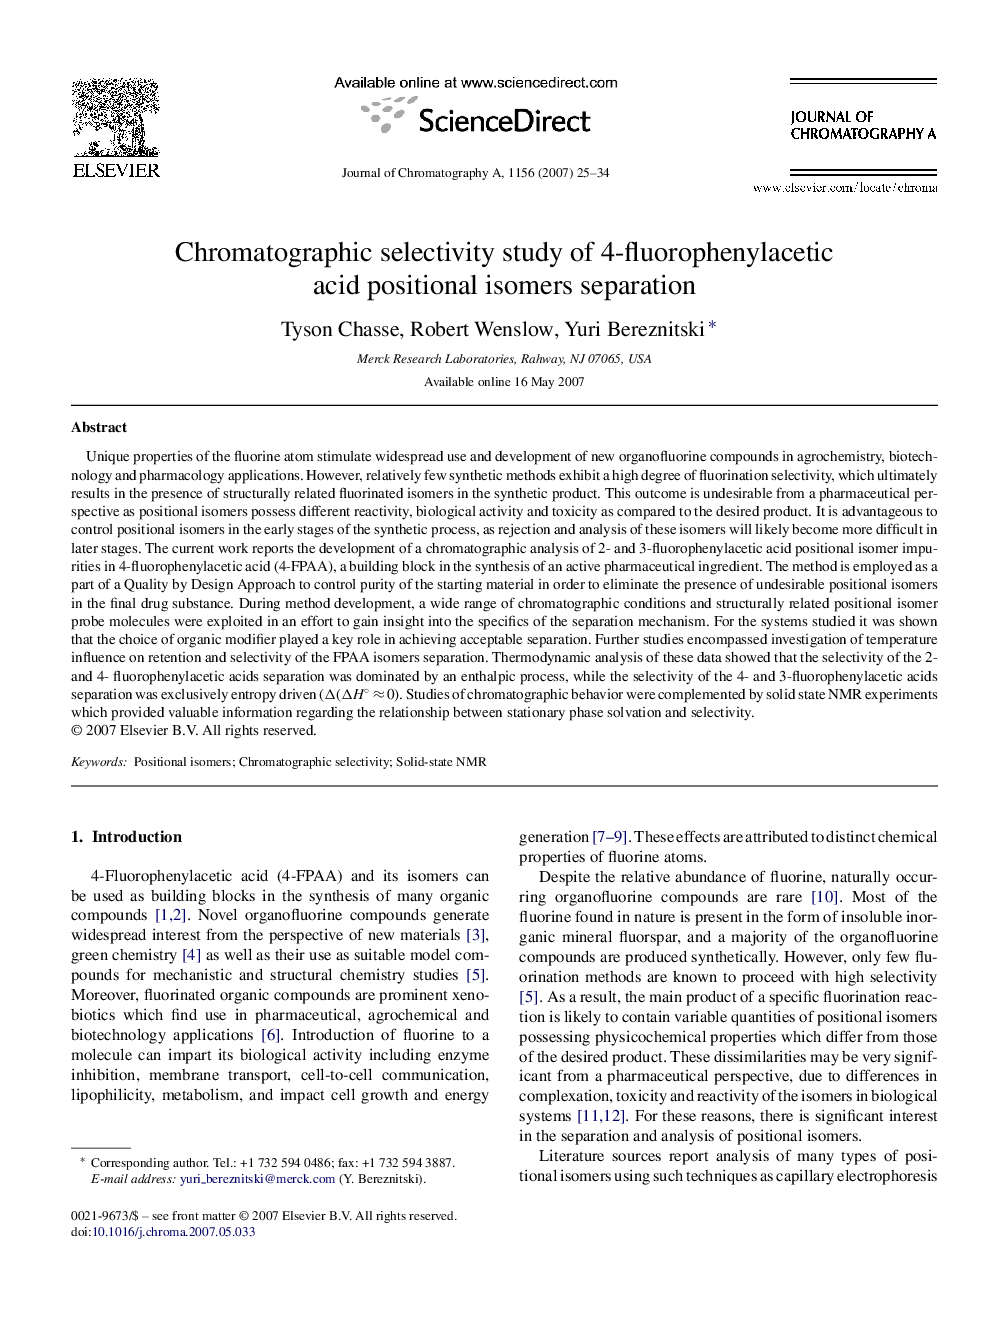 Chromatographic selectivity study of 4-fluorophenylacetic acid positional isomers separation